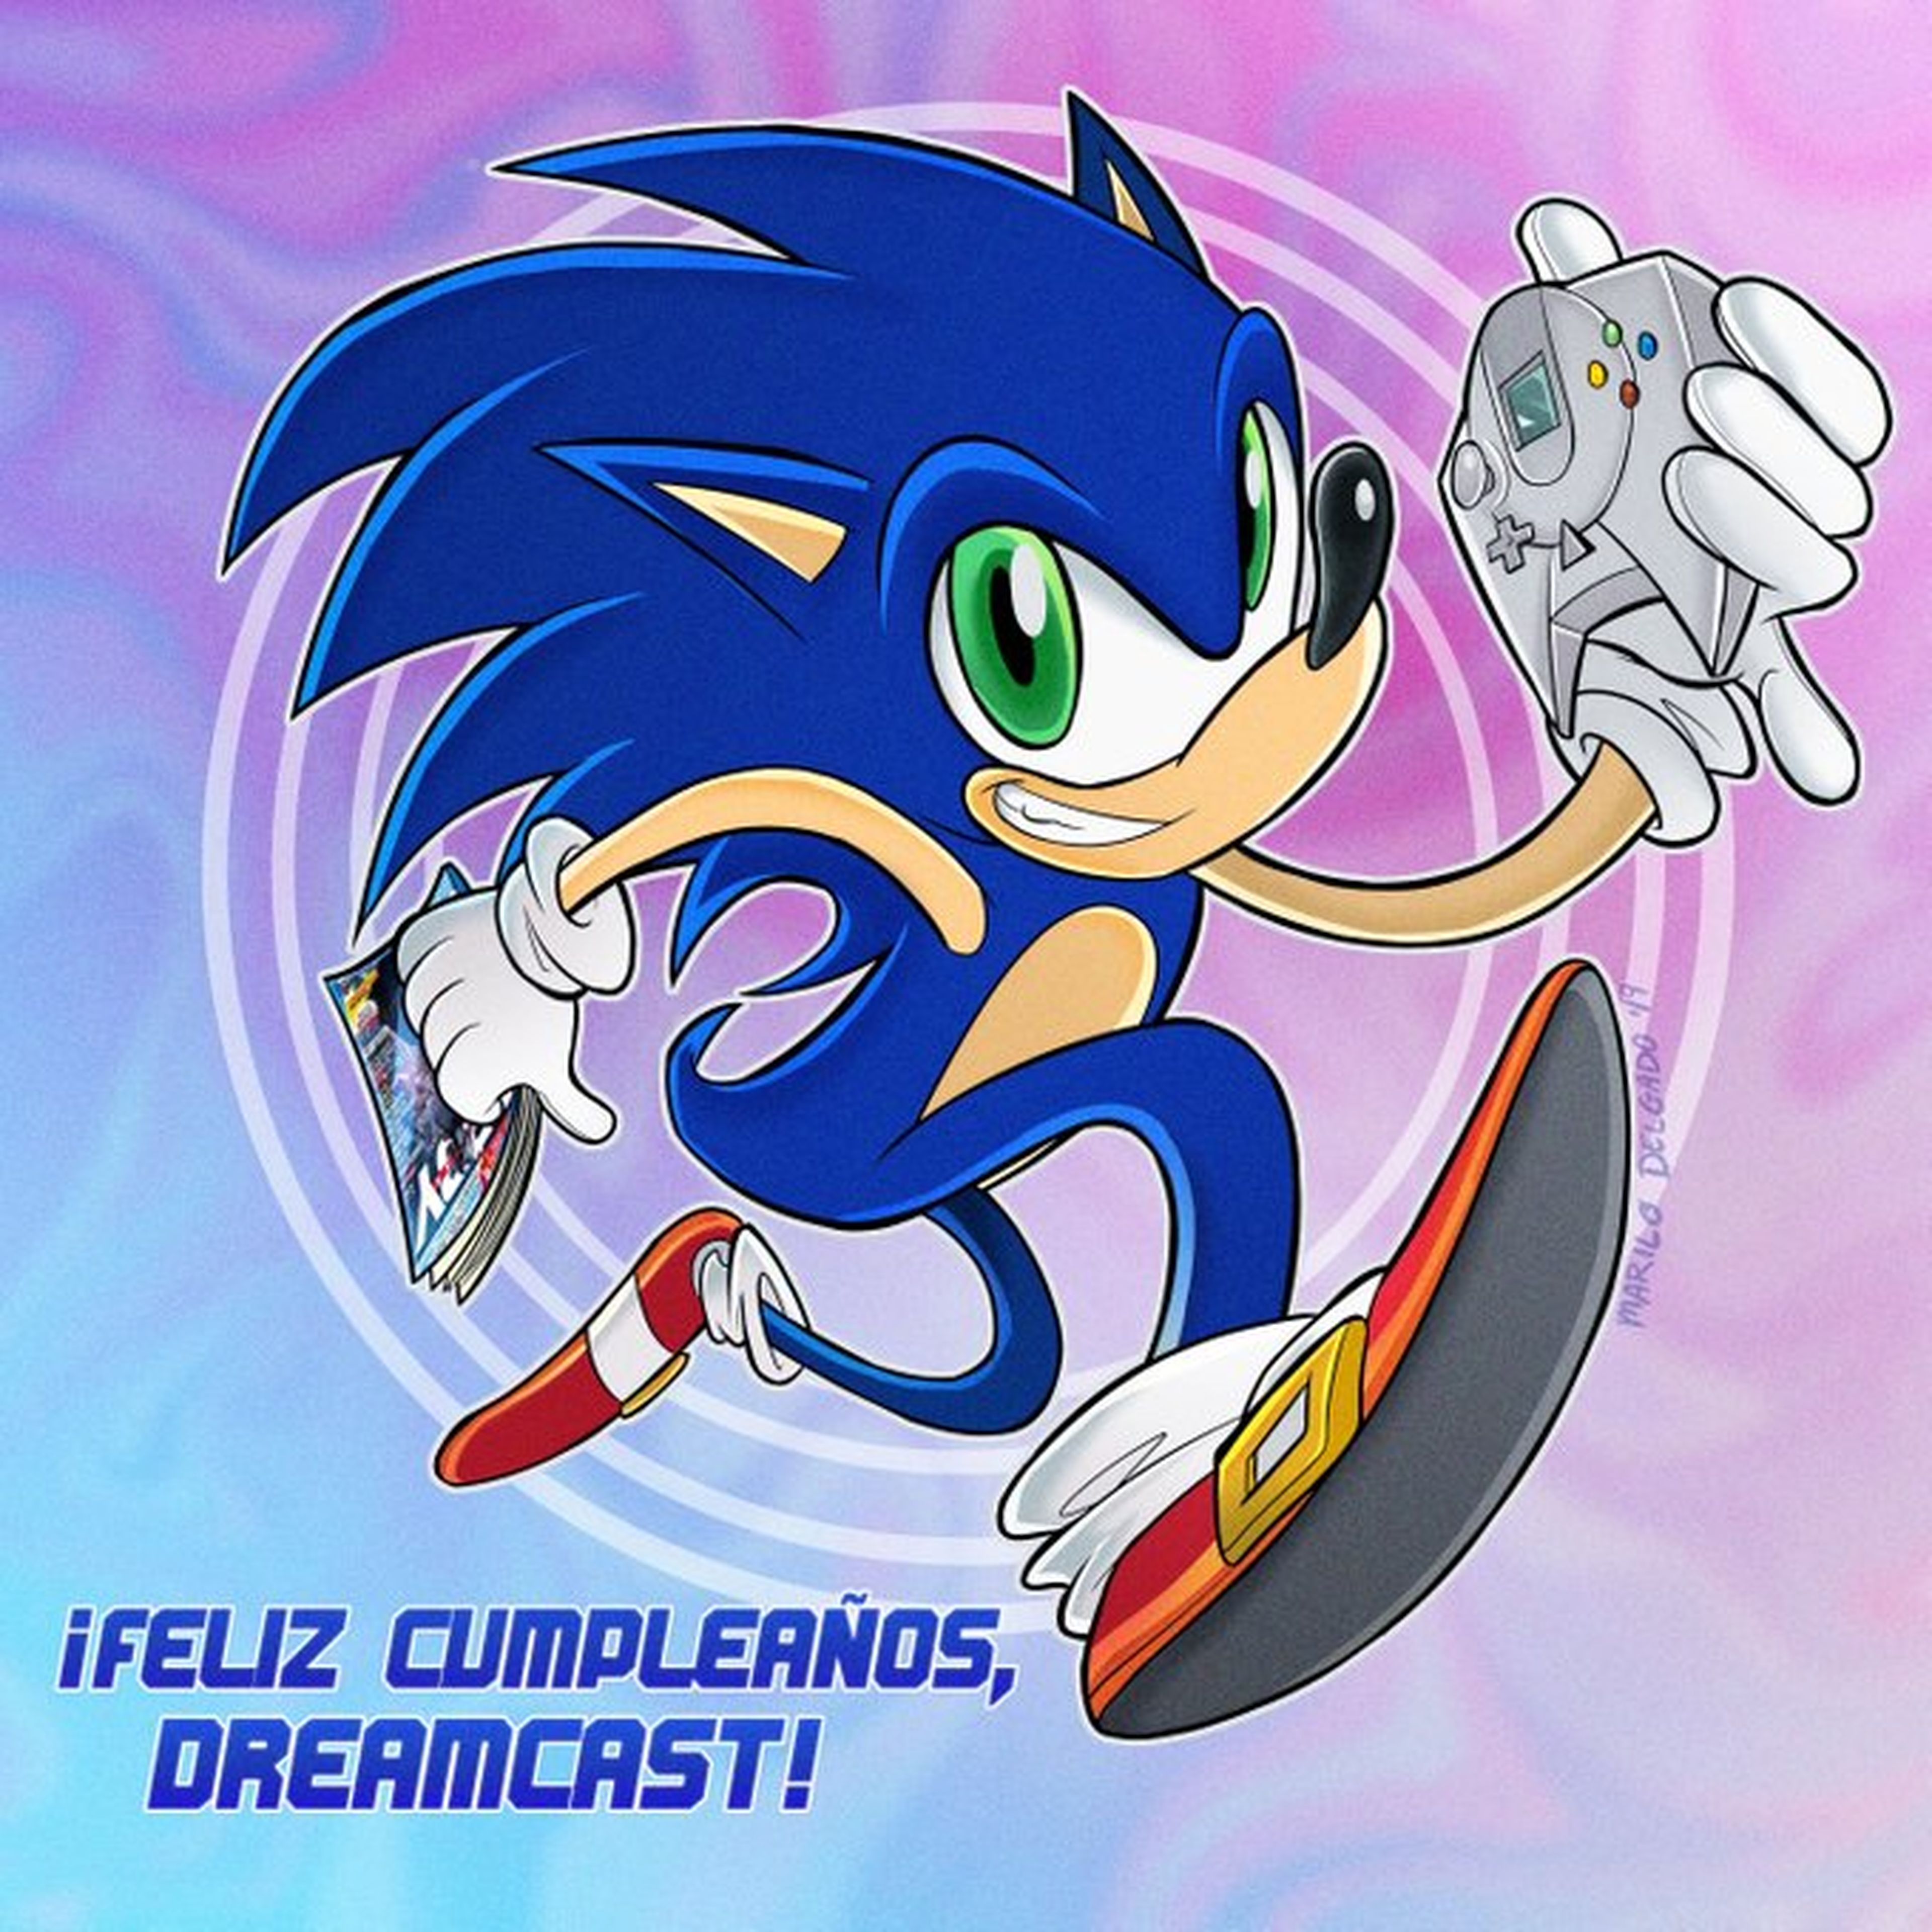 Dreamcast 20 aniversario